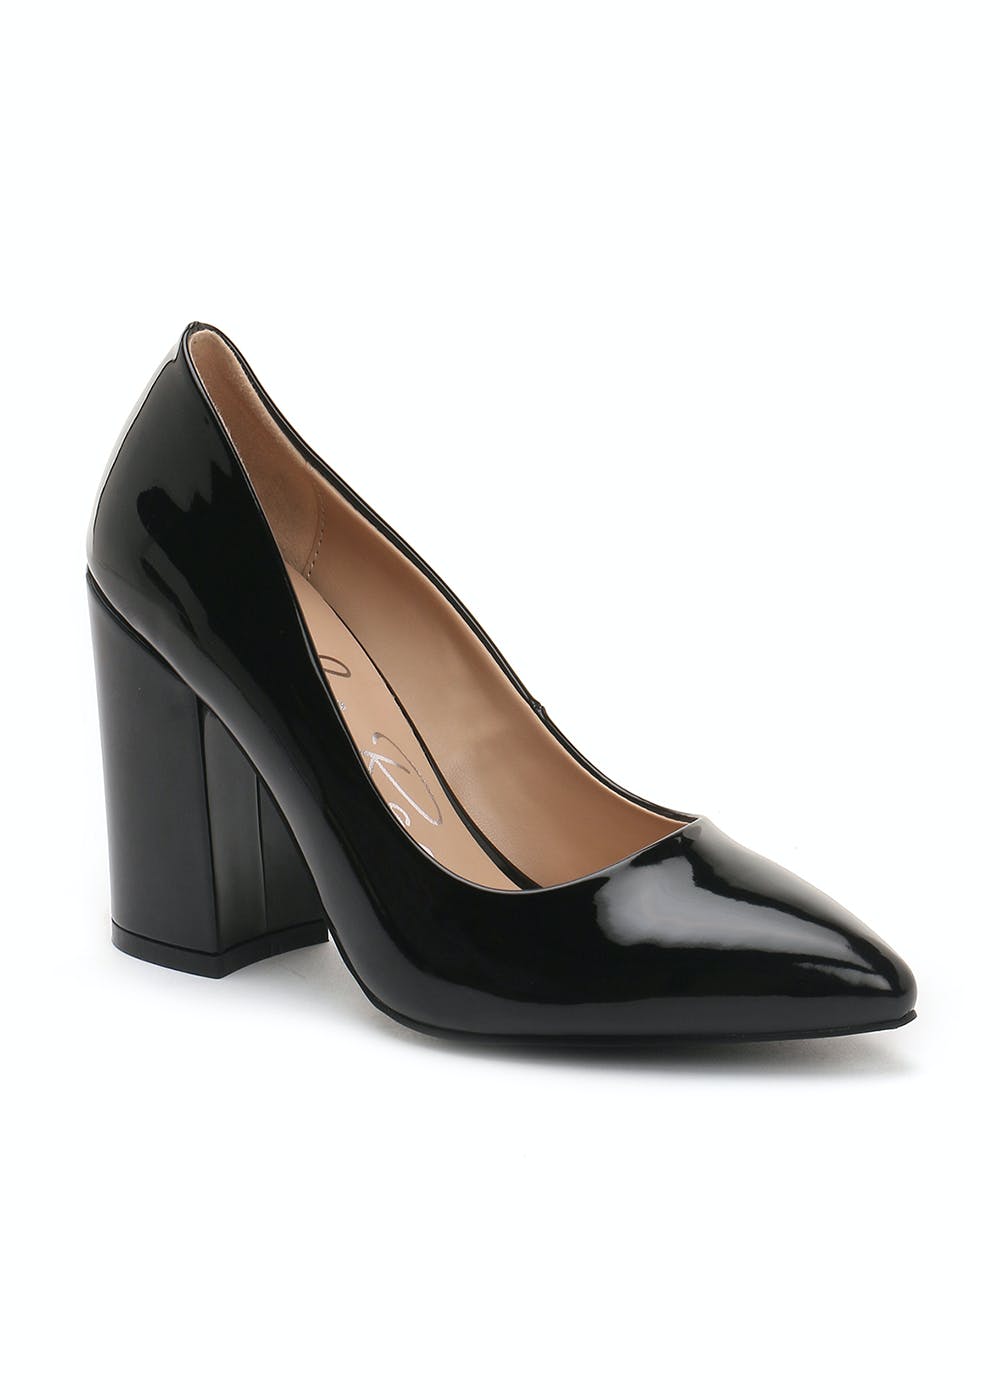 Shoes Suede Platform Round Toe | 5cm Heel Shoes Womens Platform - Womens  Suede Heels - Aliexpress